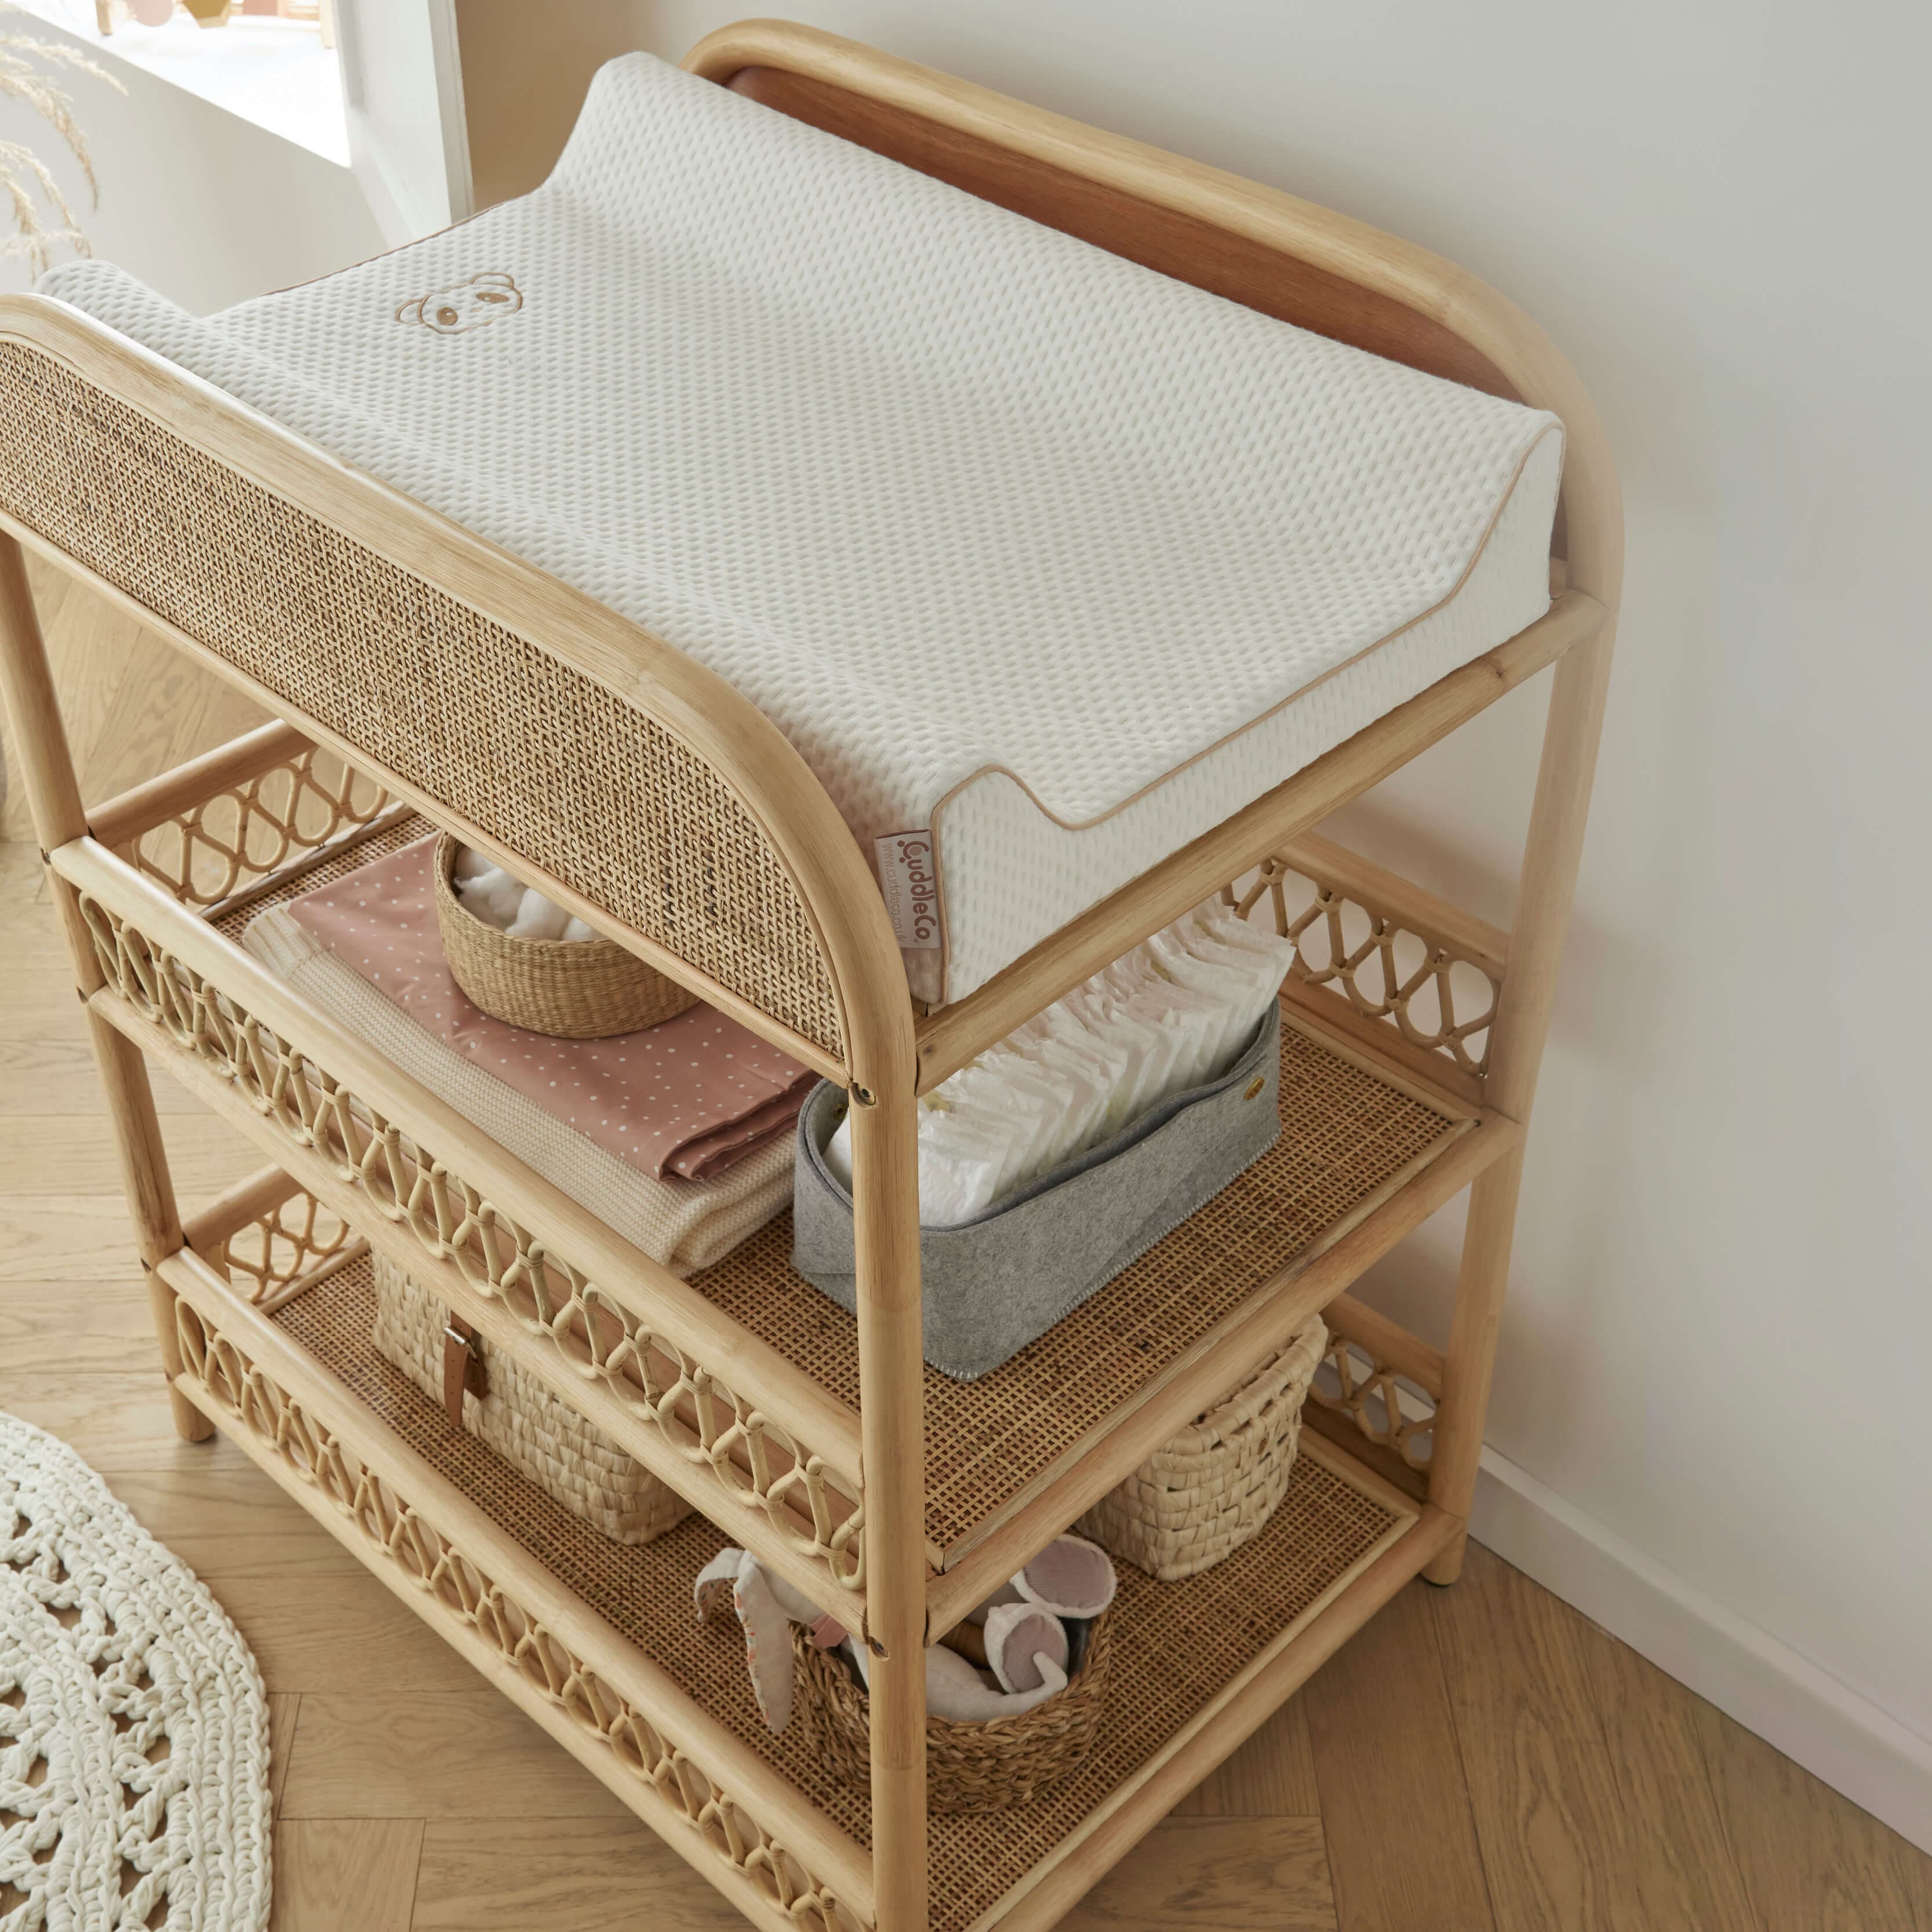 CuddleCo Aria Crib and Changer Room Set in Rattan Nursery Room Sets FRN/CUD/151144 5060971151144